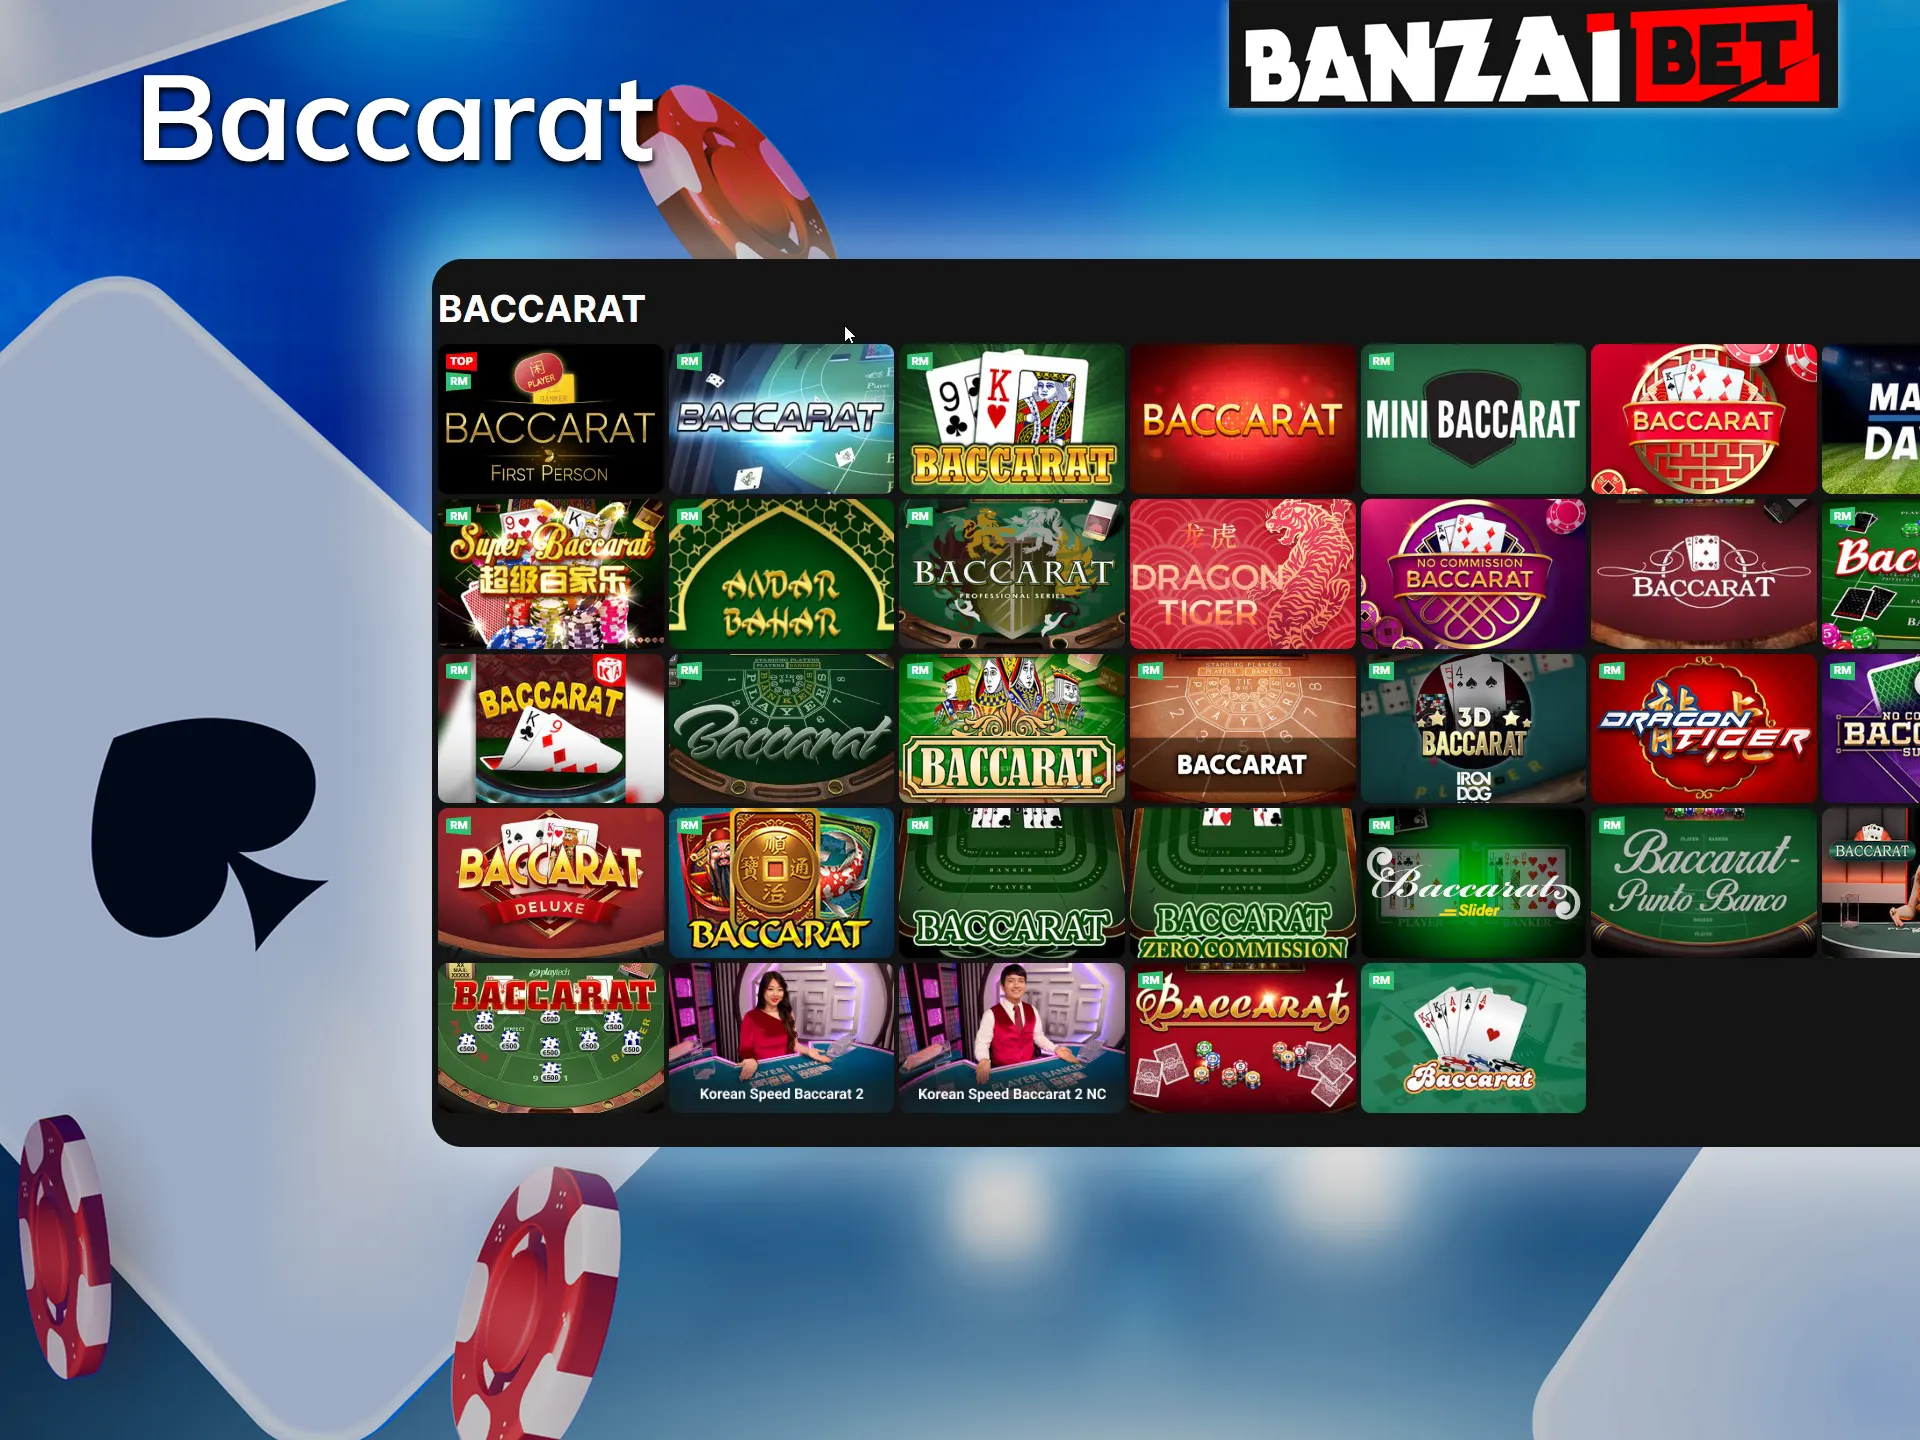 Play Baccarat at Banzai Bet online casino.